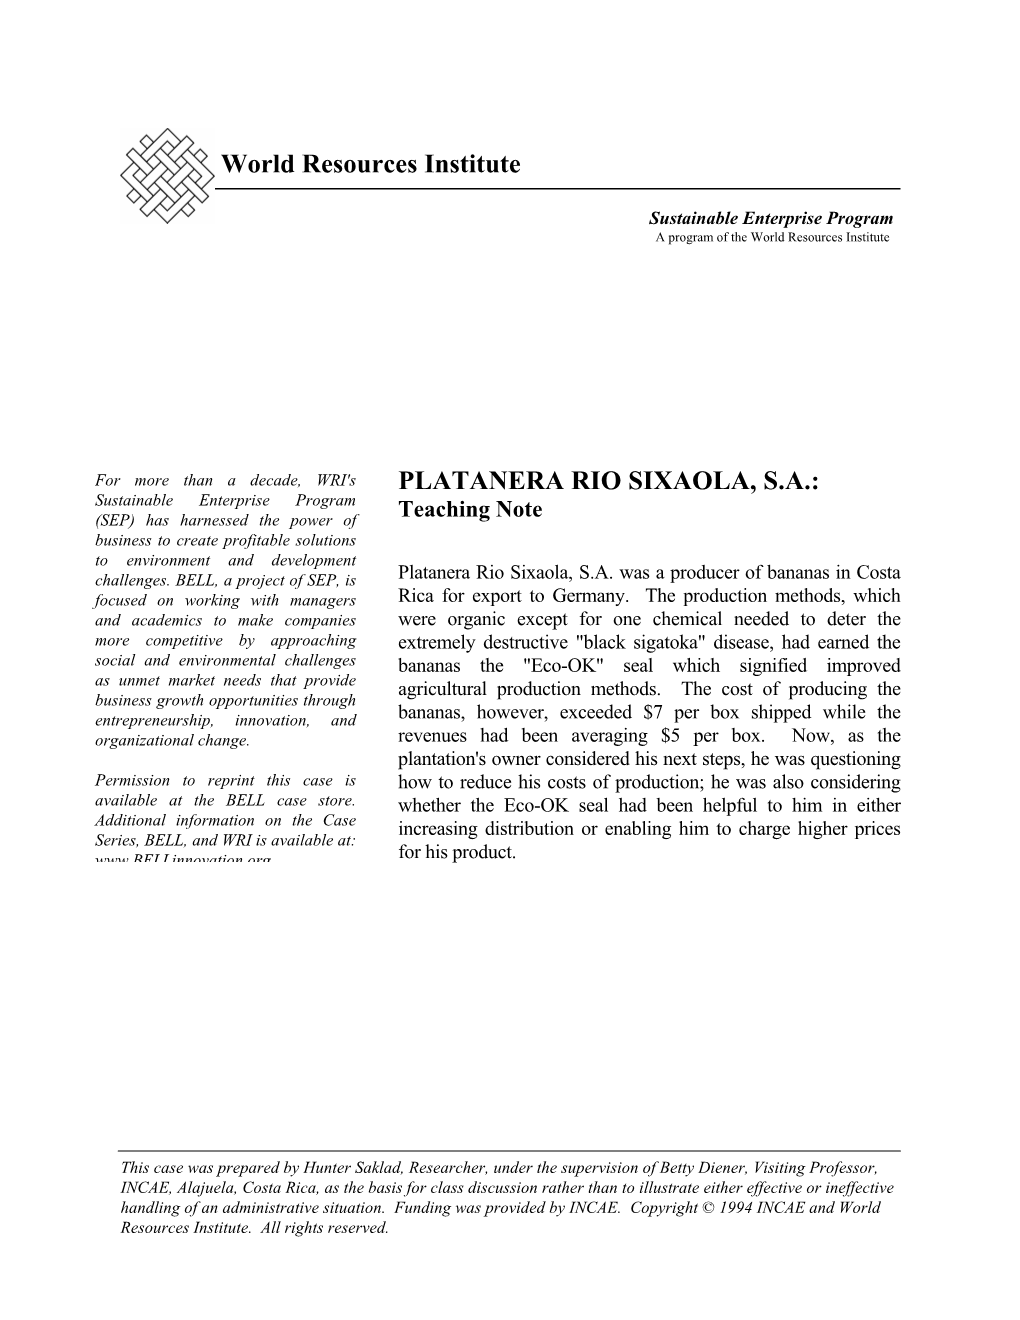 World Resources Institute PLATANERA RIO SIXAOLA, S.A